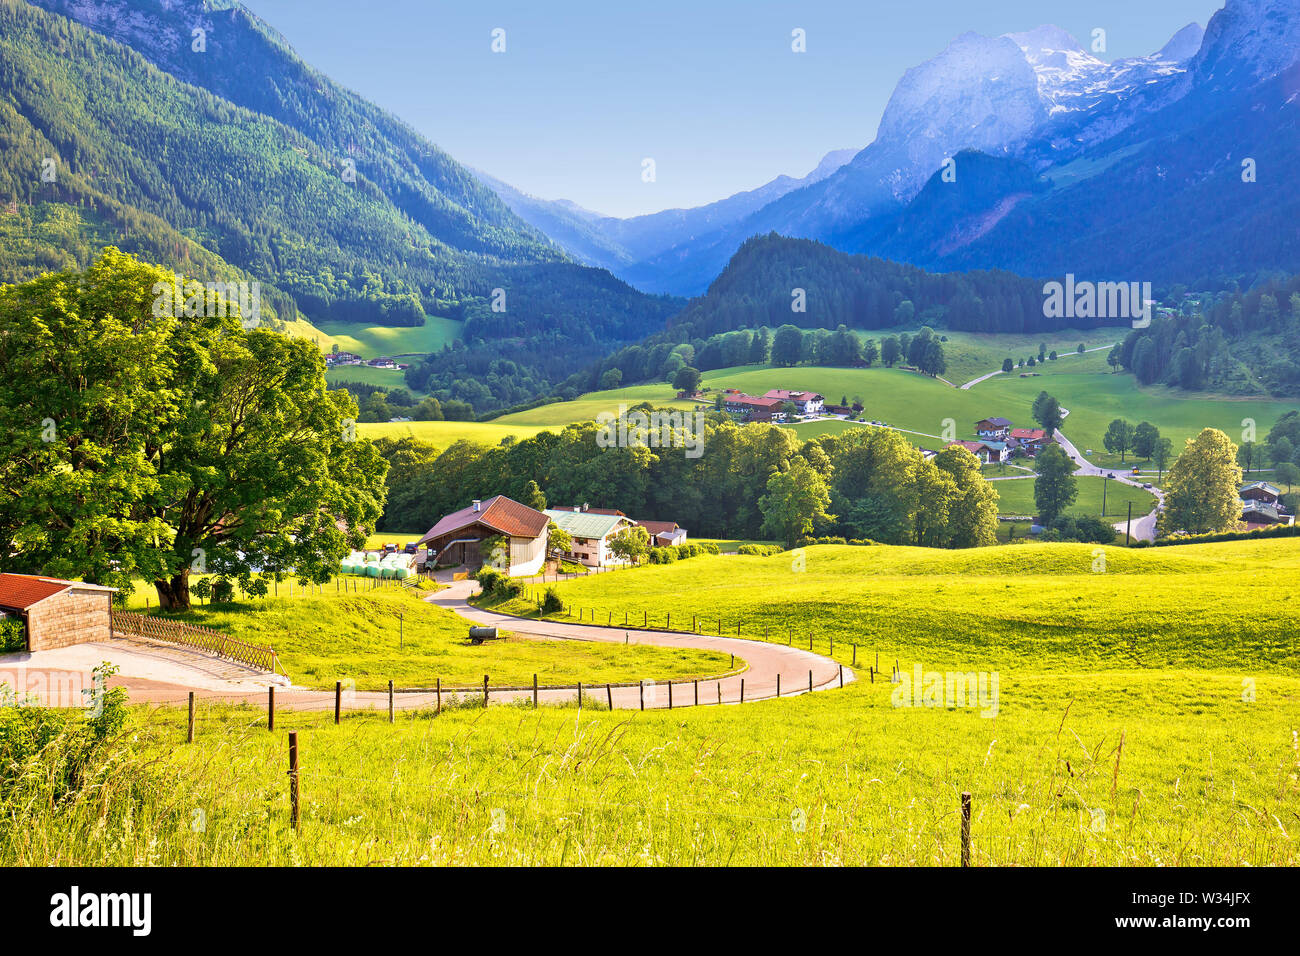 Ramsau valley in Berchtesgaden Alpine region landscape view, Bavaria region of Germany Stock Photo